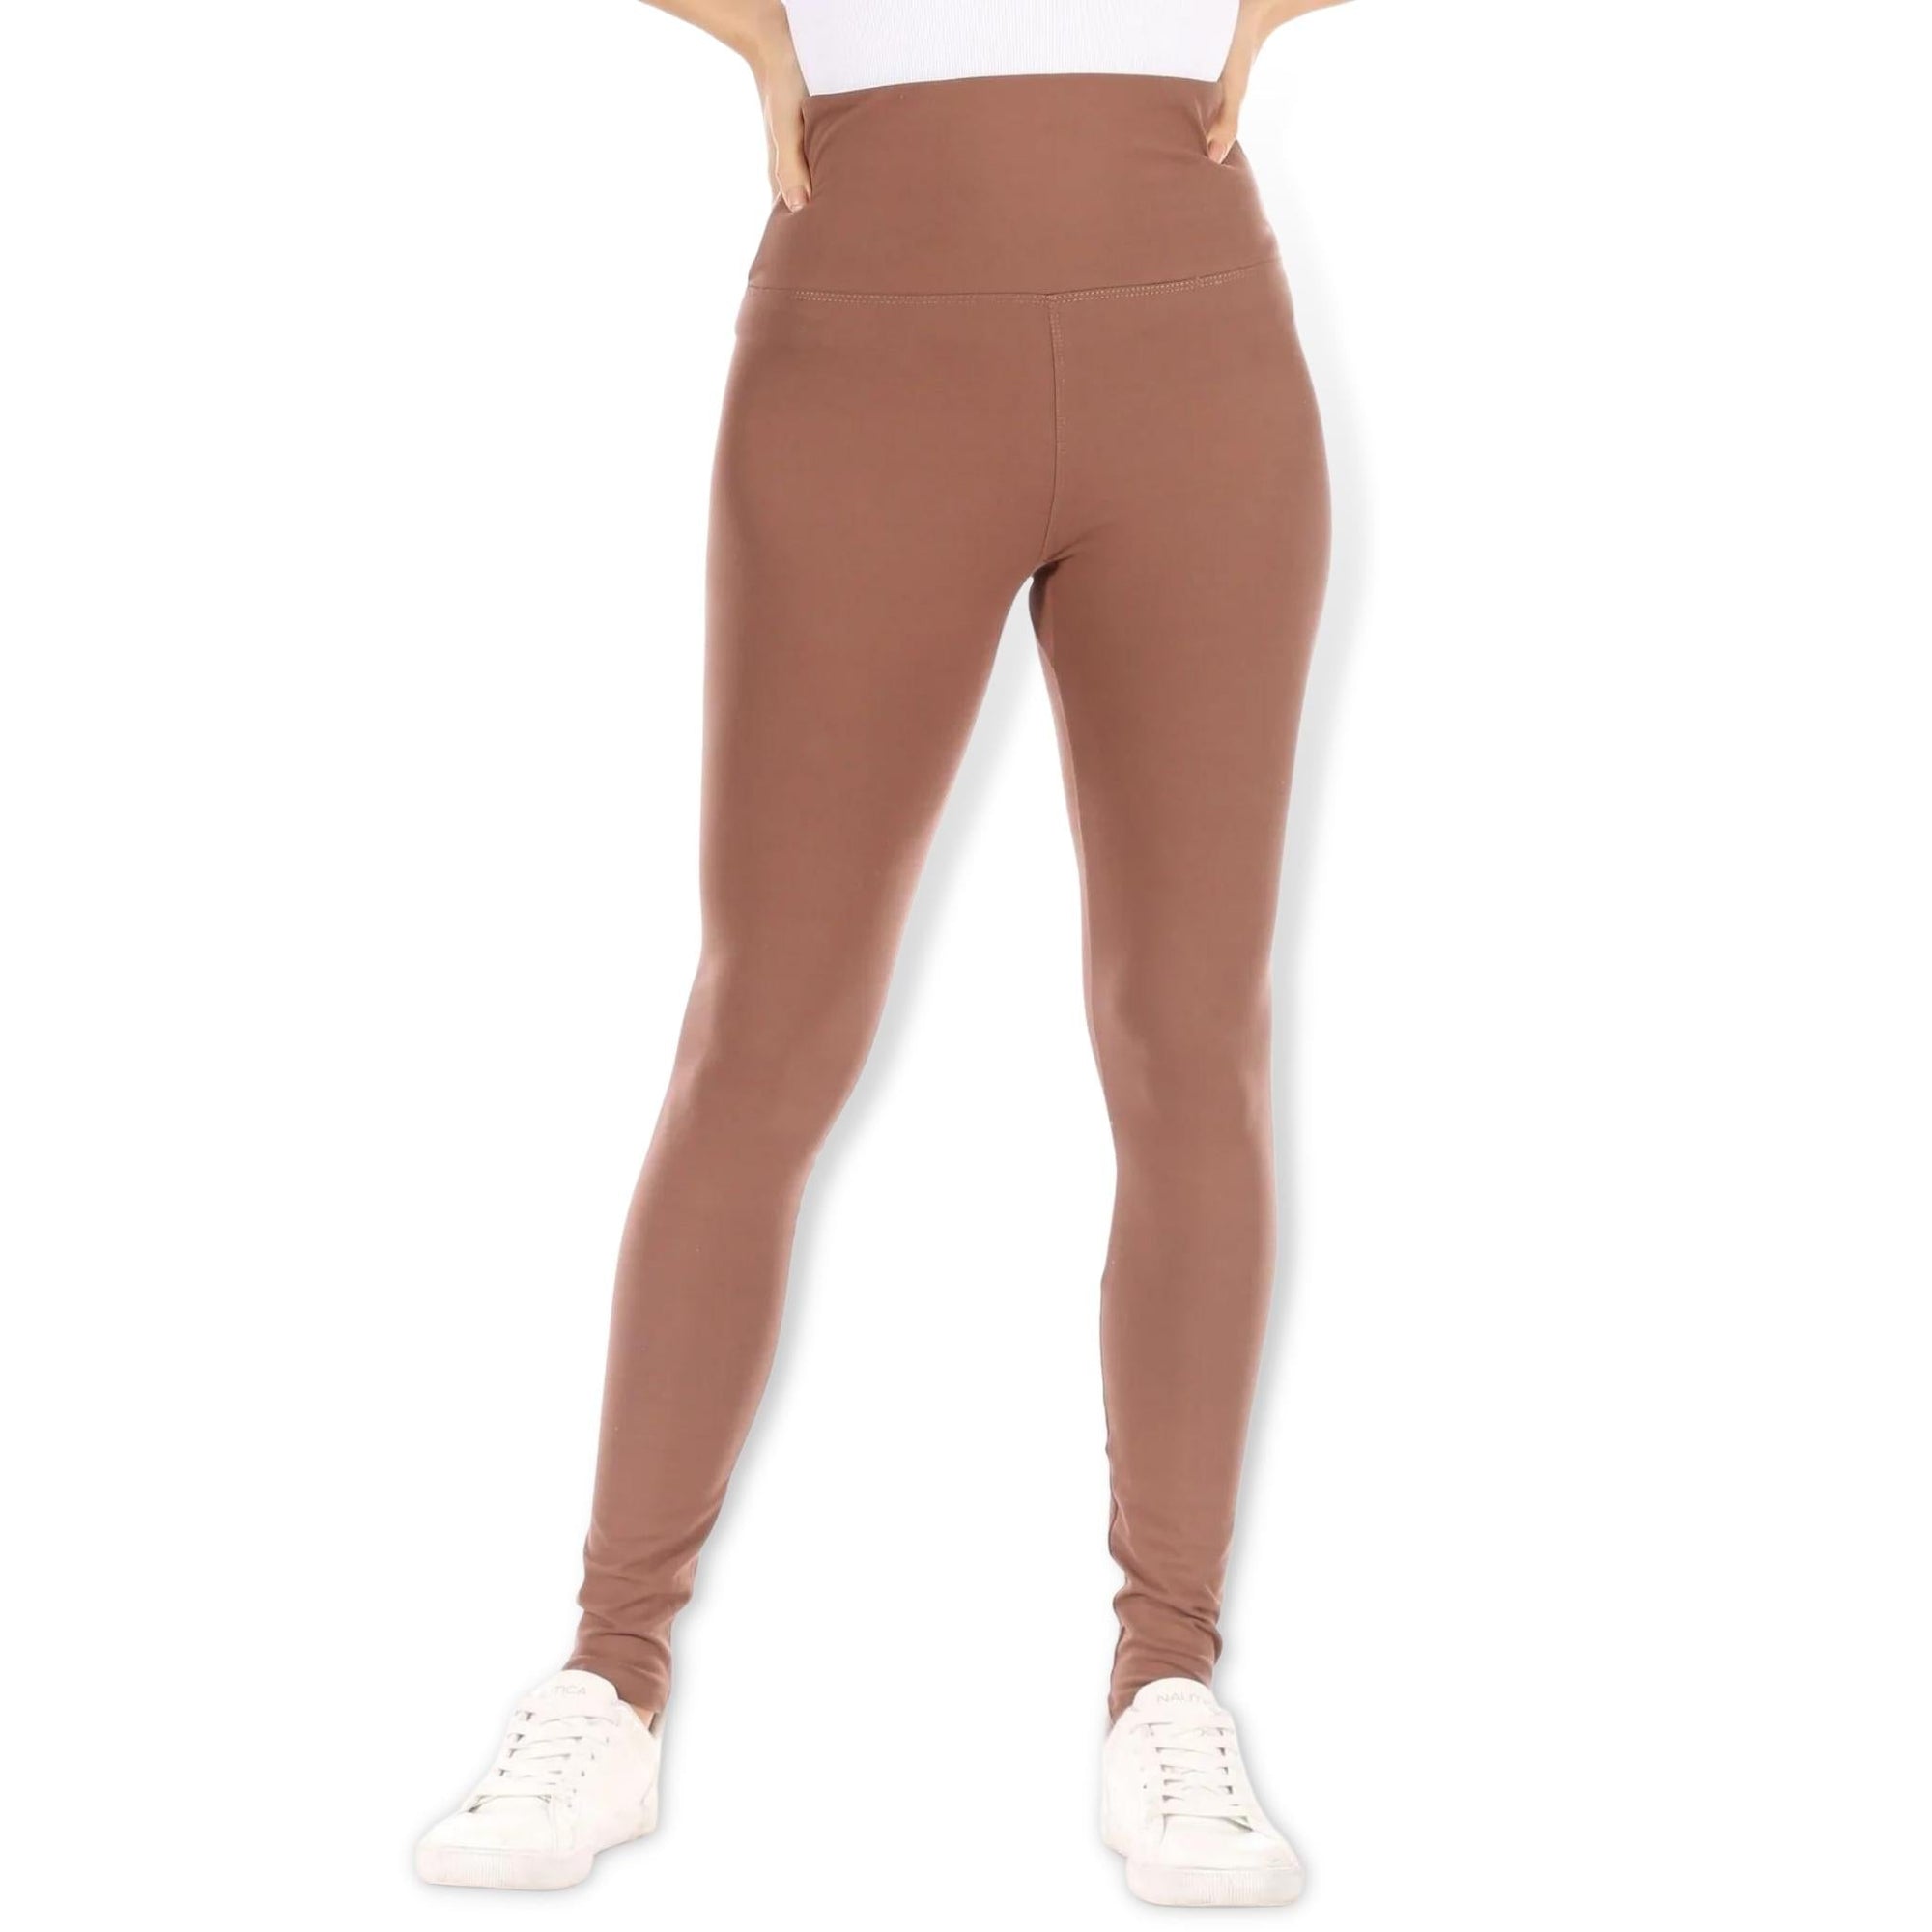 Suzette Milk Chocolate 5" High Waist Brushed Poly Leggings - a Spirit Animal - leggings active Oct 2022 bottoms Junior Large